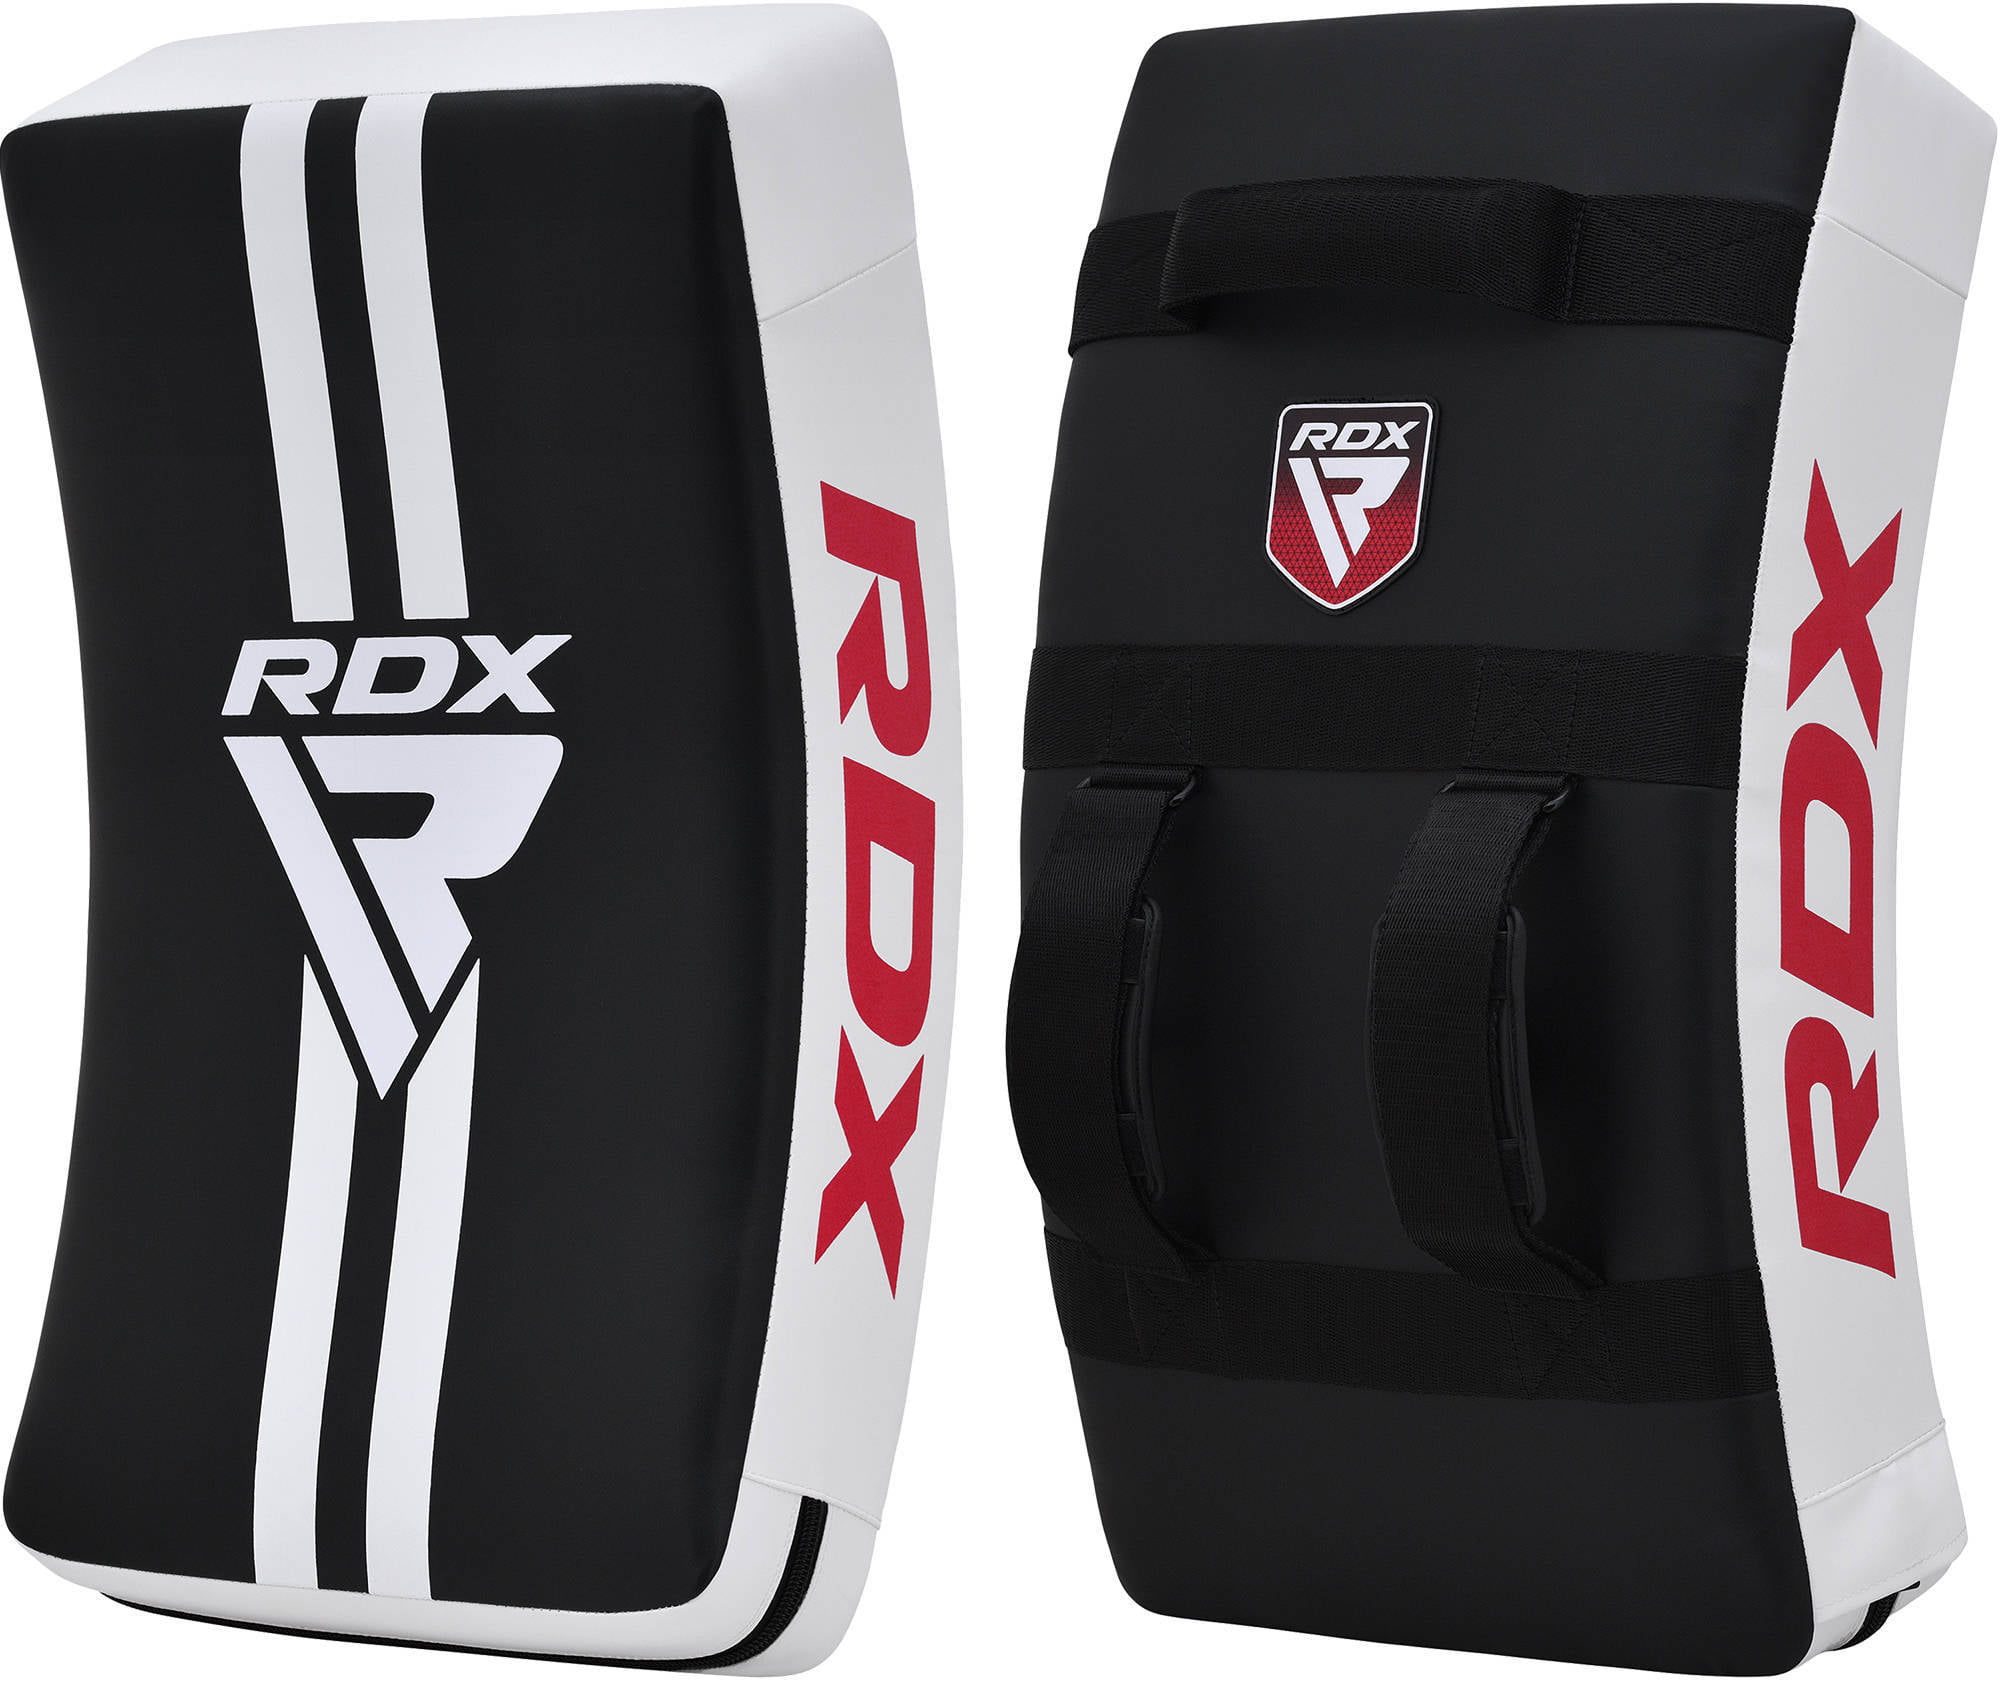 RDX Strike Shield for Kickboxing, Strike and Kicking pad, Muay Thai Boxing,  MMA Training White (One pad only)